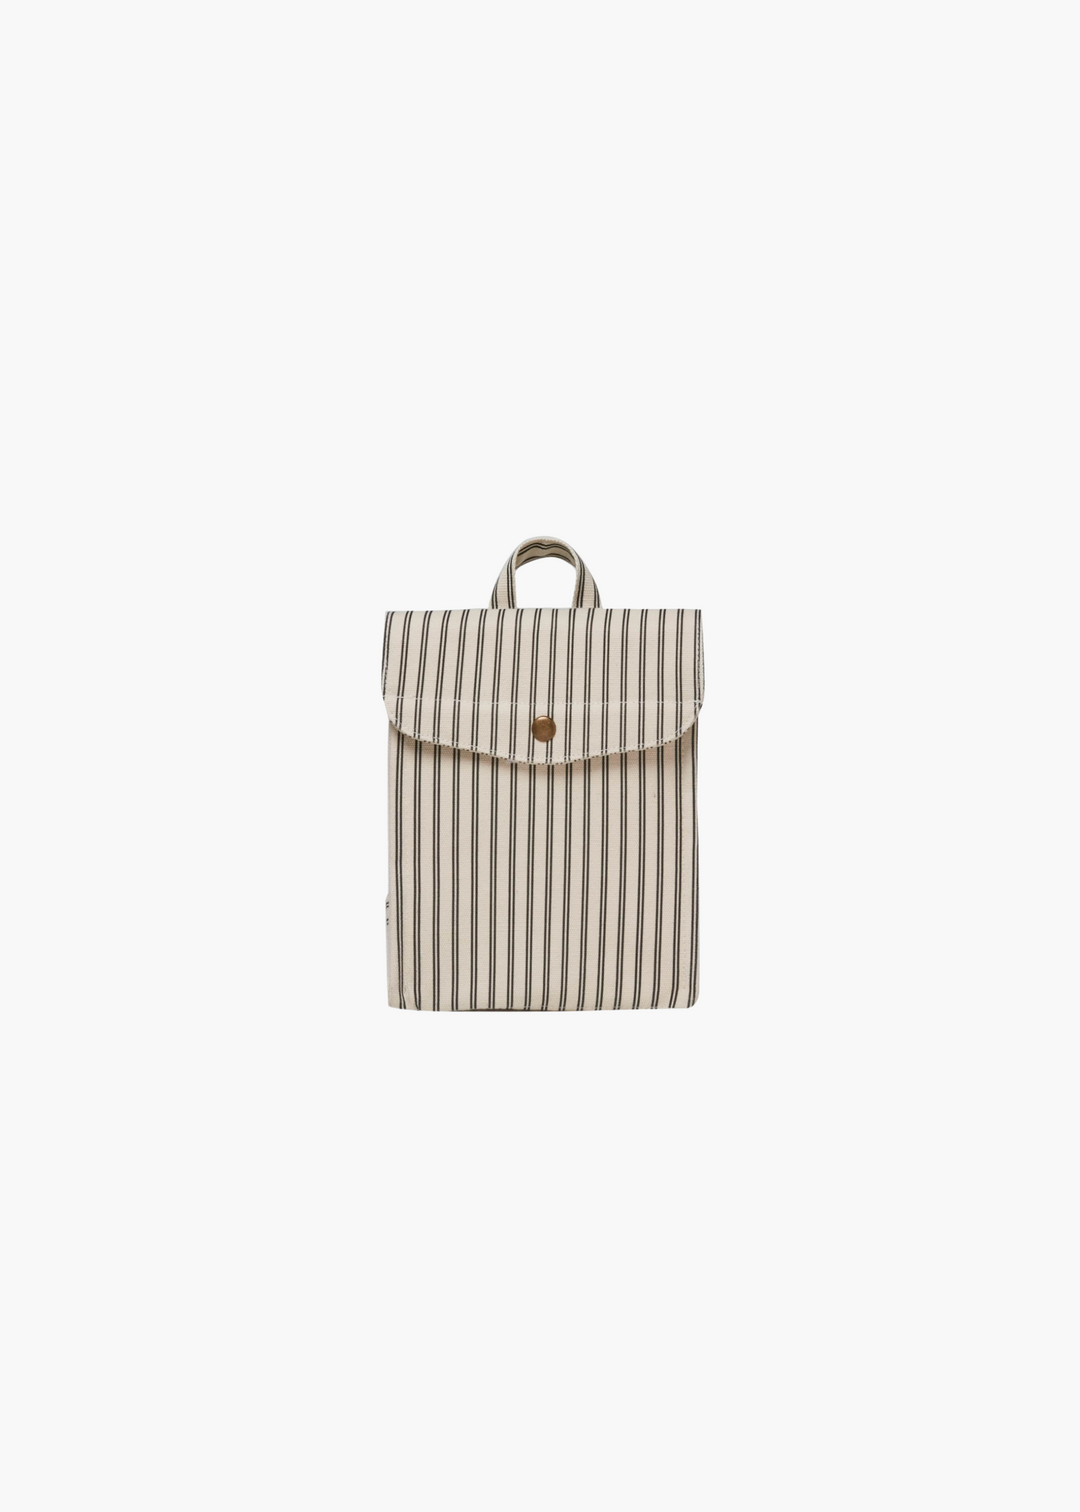 Lunch Bag | Black Pinstripe - FINAL SALE